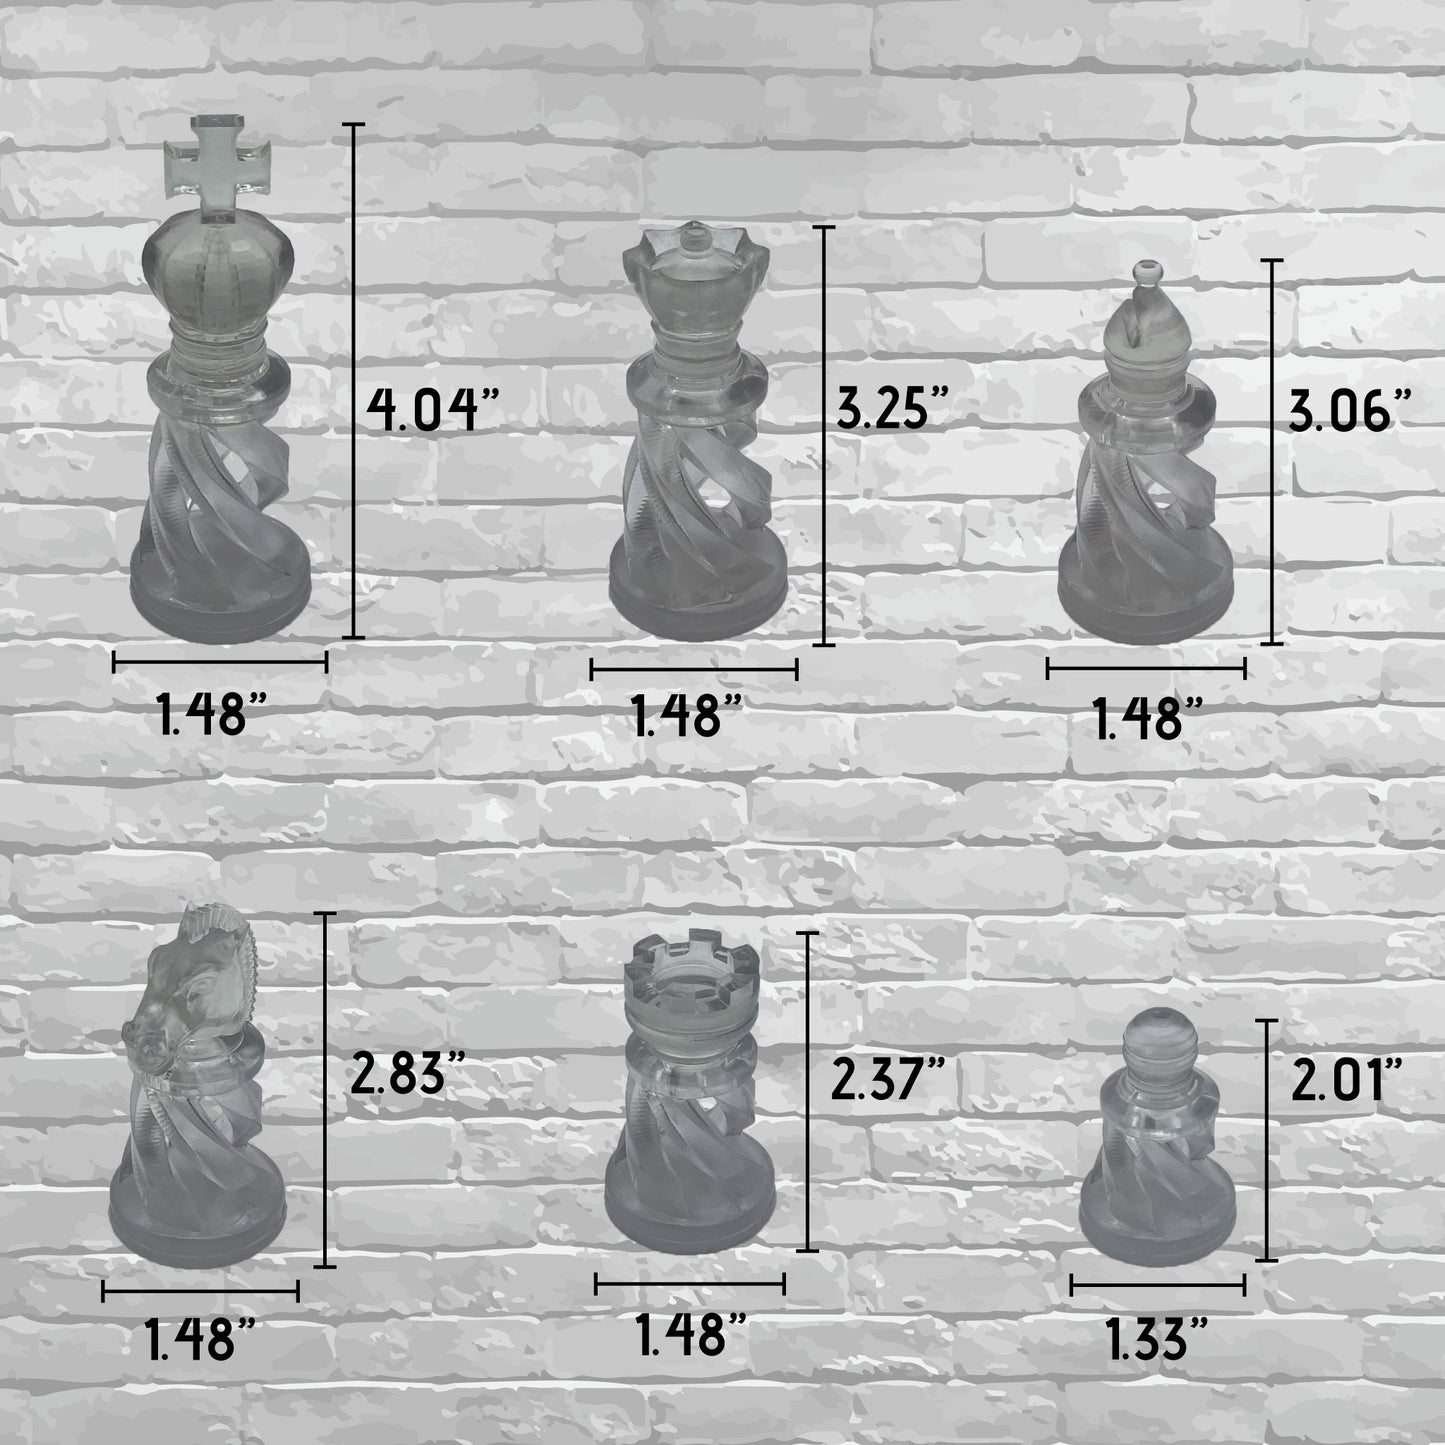 Spiral 3D Printed Chess Set